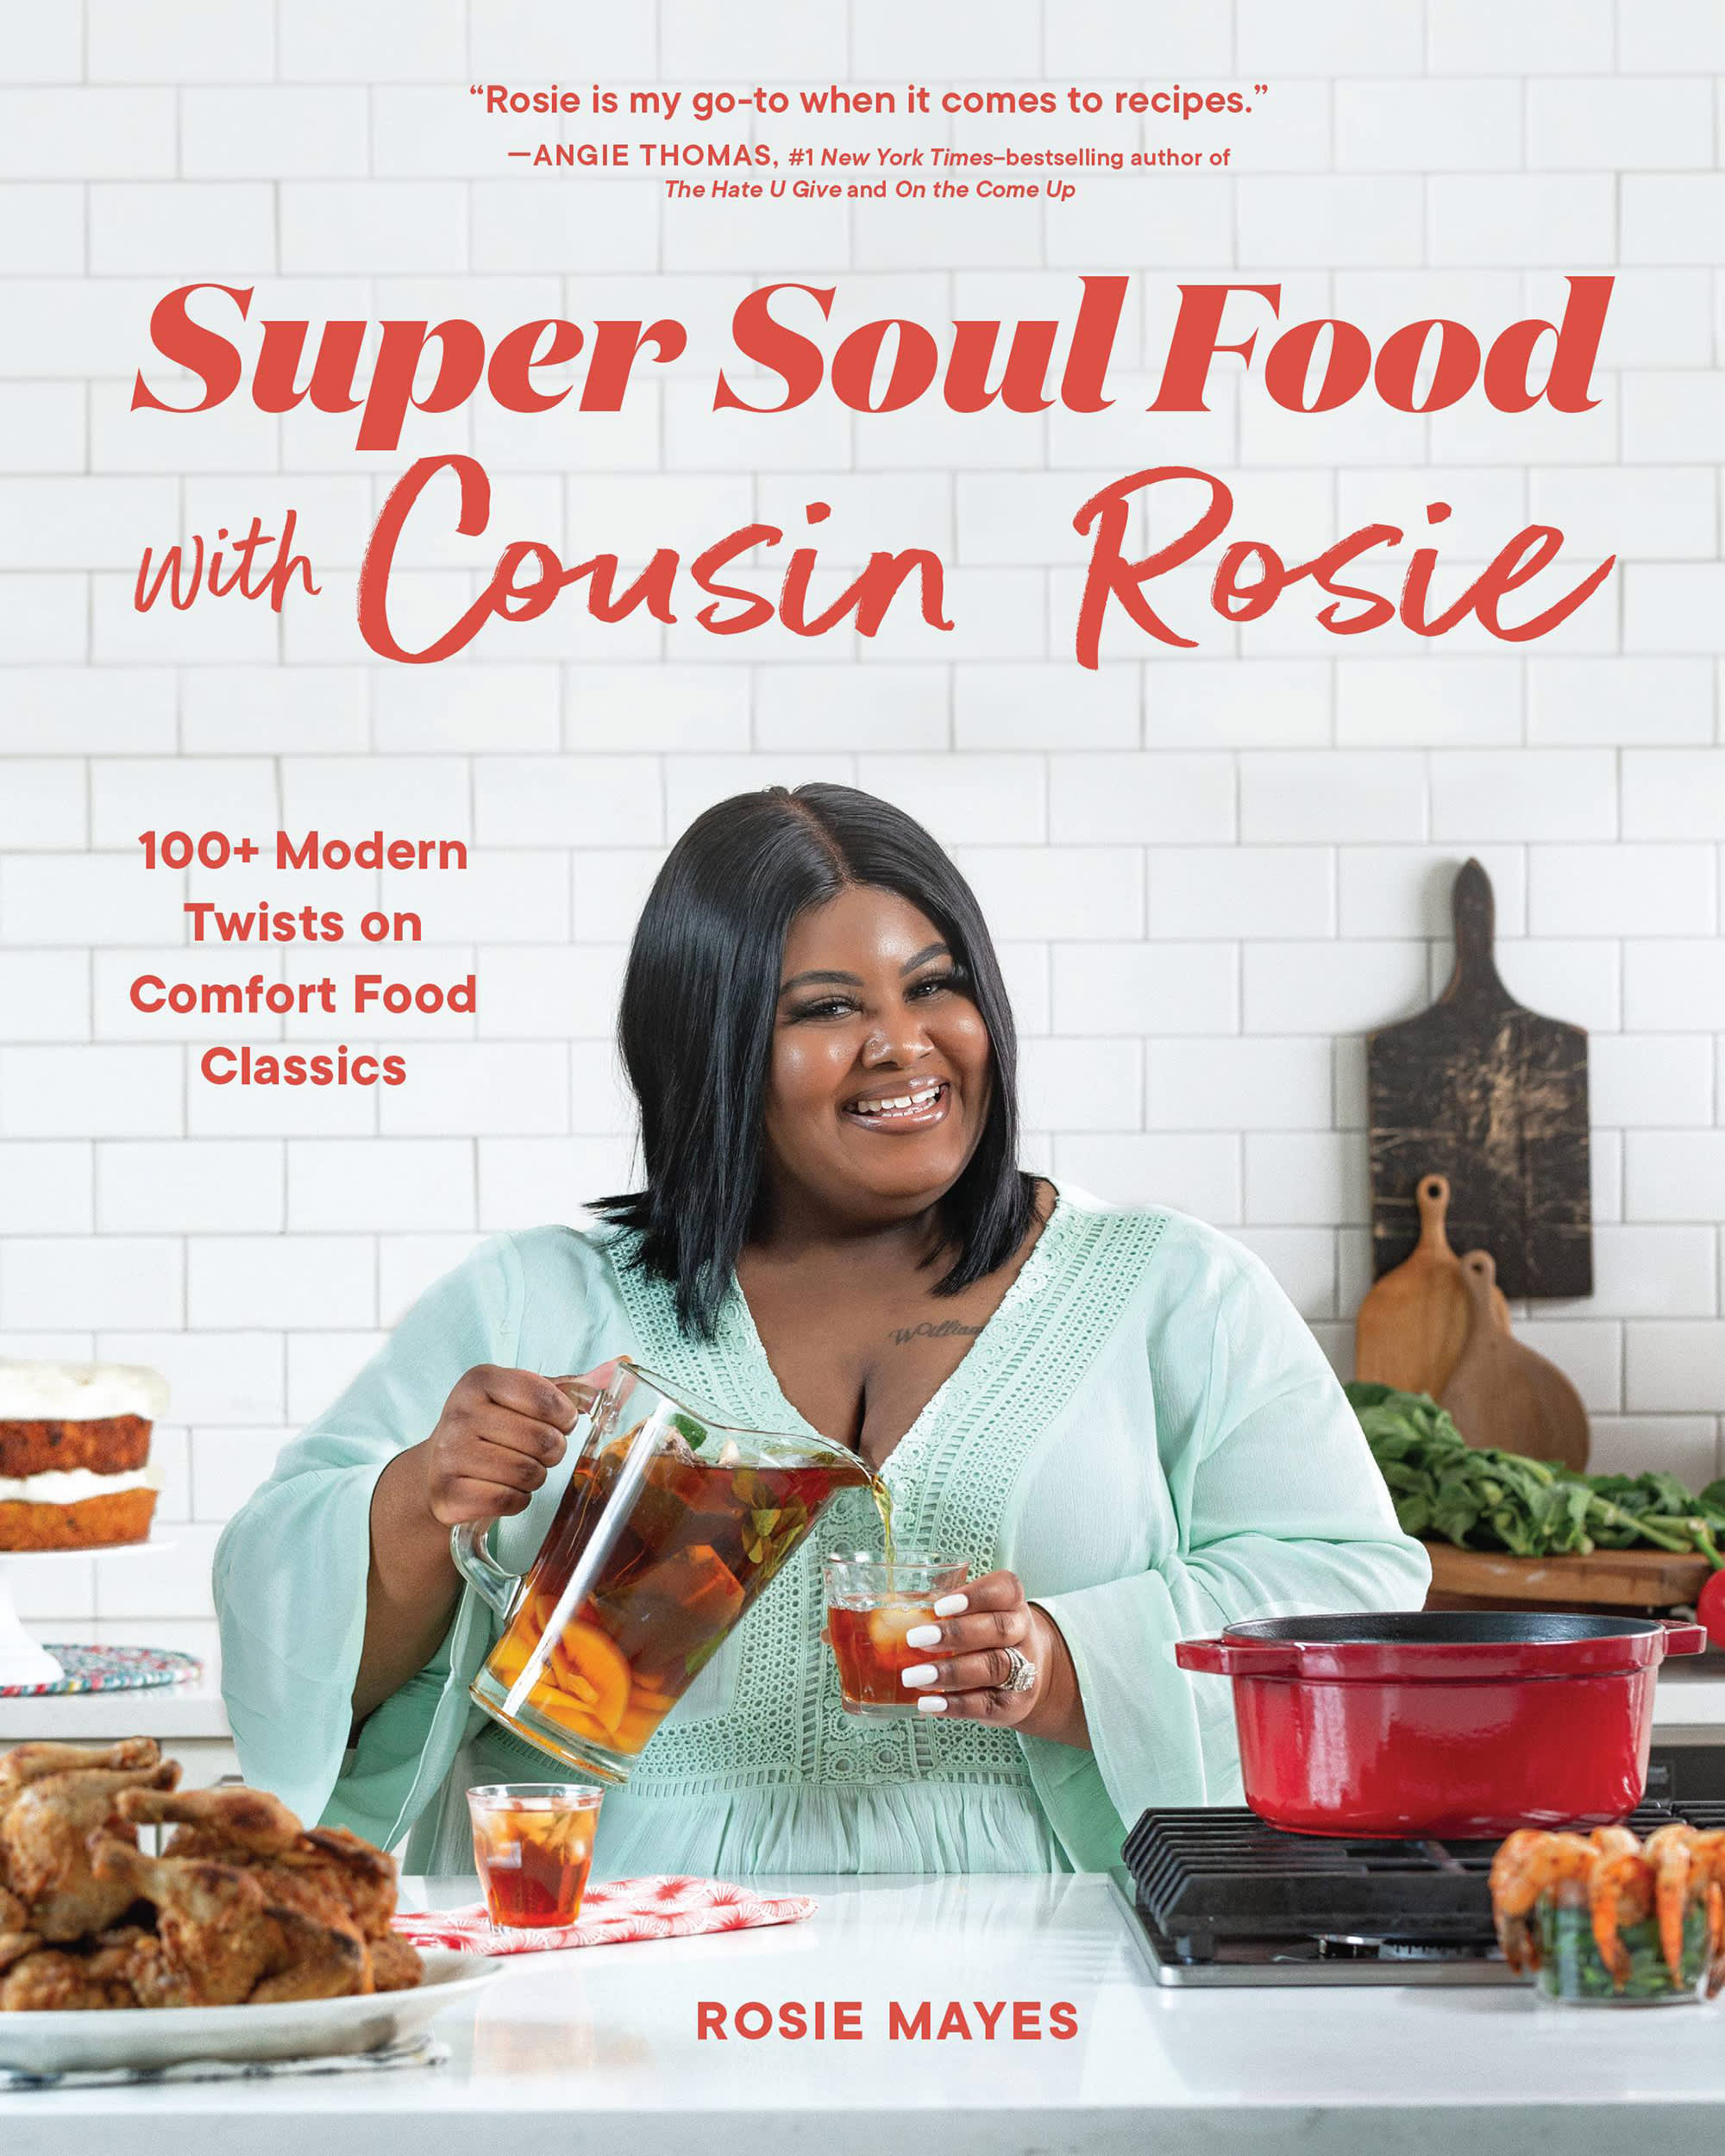 Soul Food Seasoning Recipe 